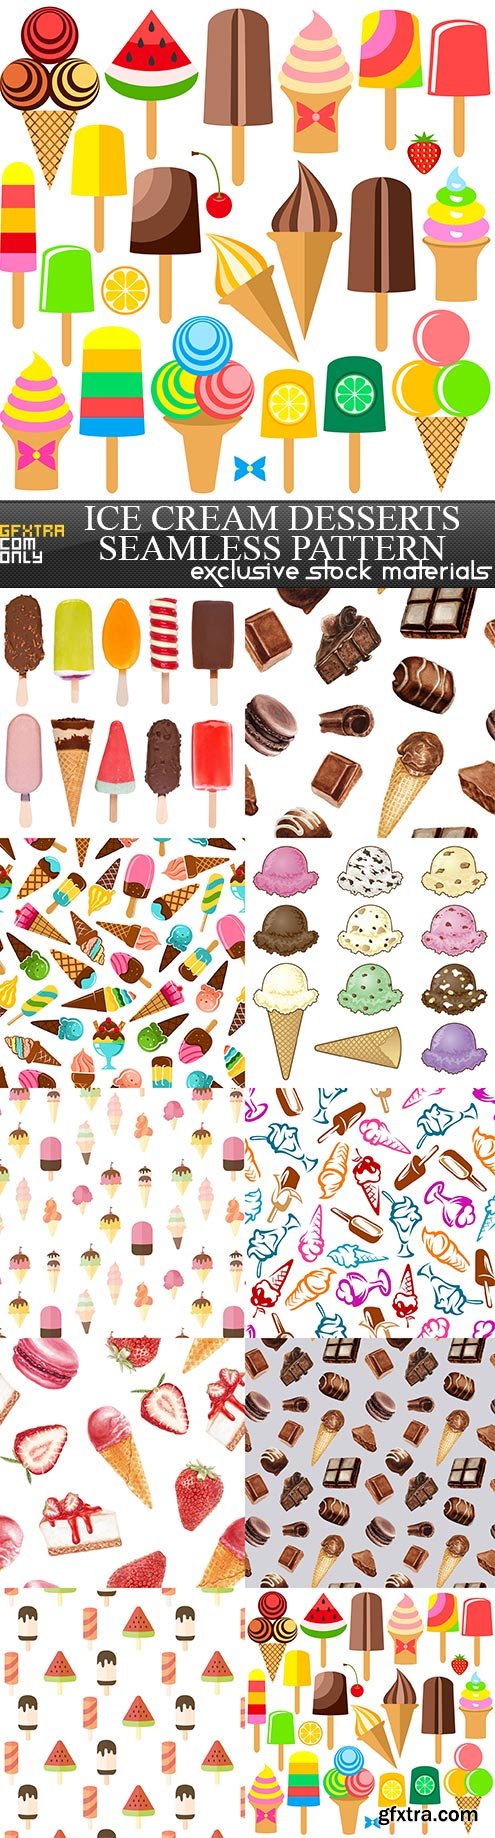 Ice cream desserts seamless pattern, 10  x  UHQ JPEG